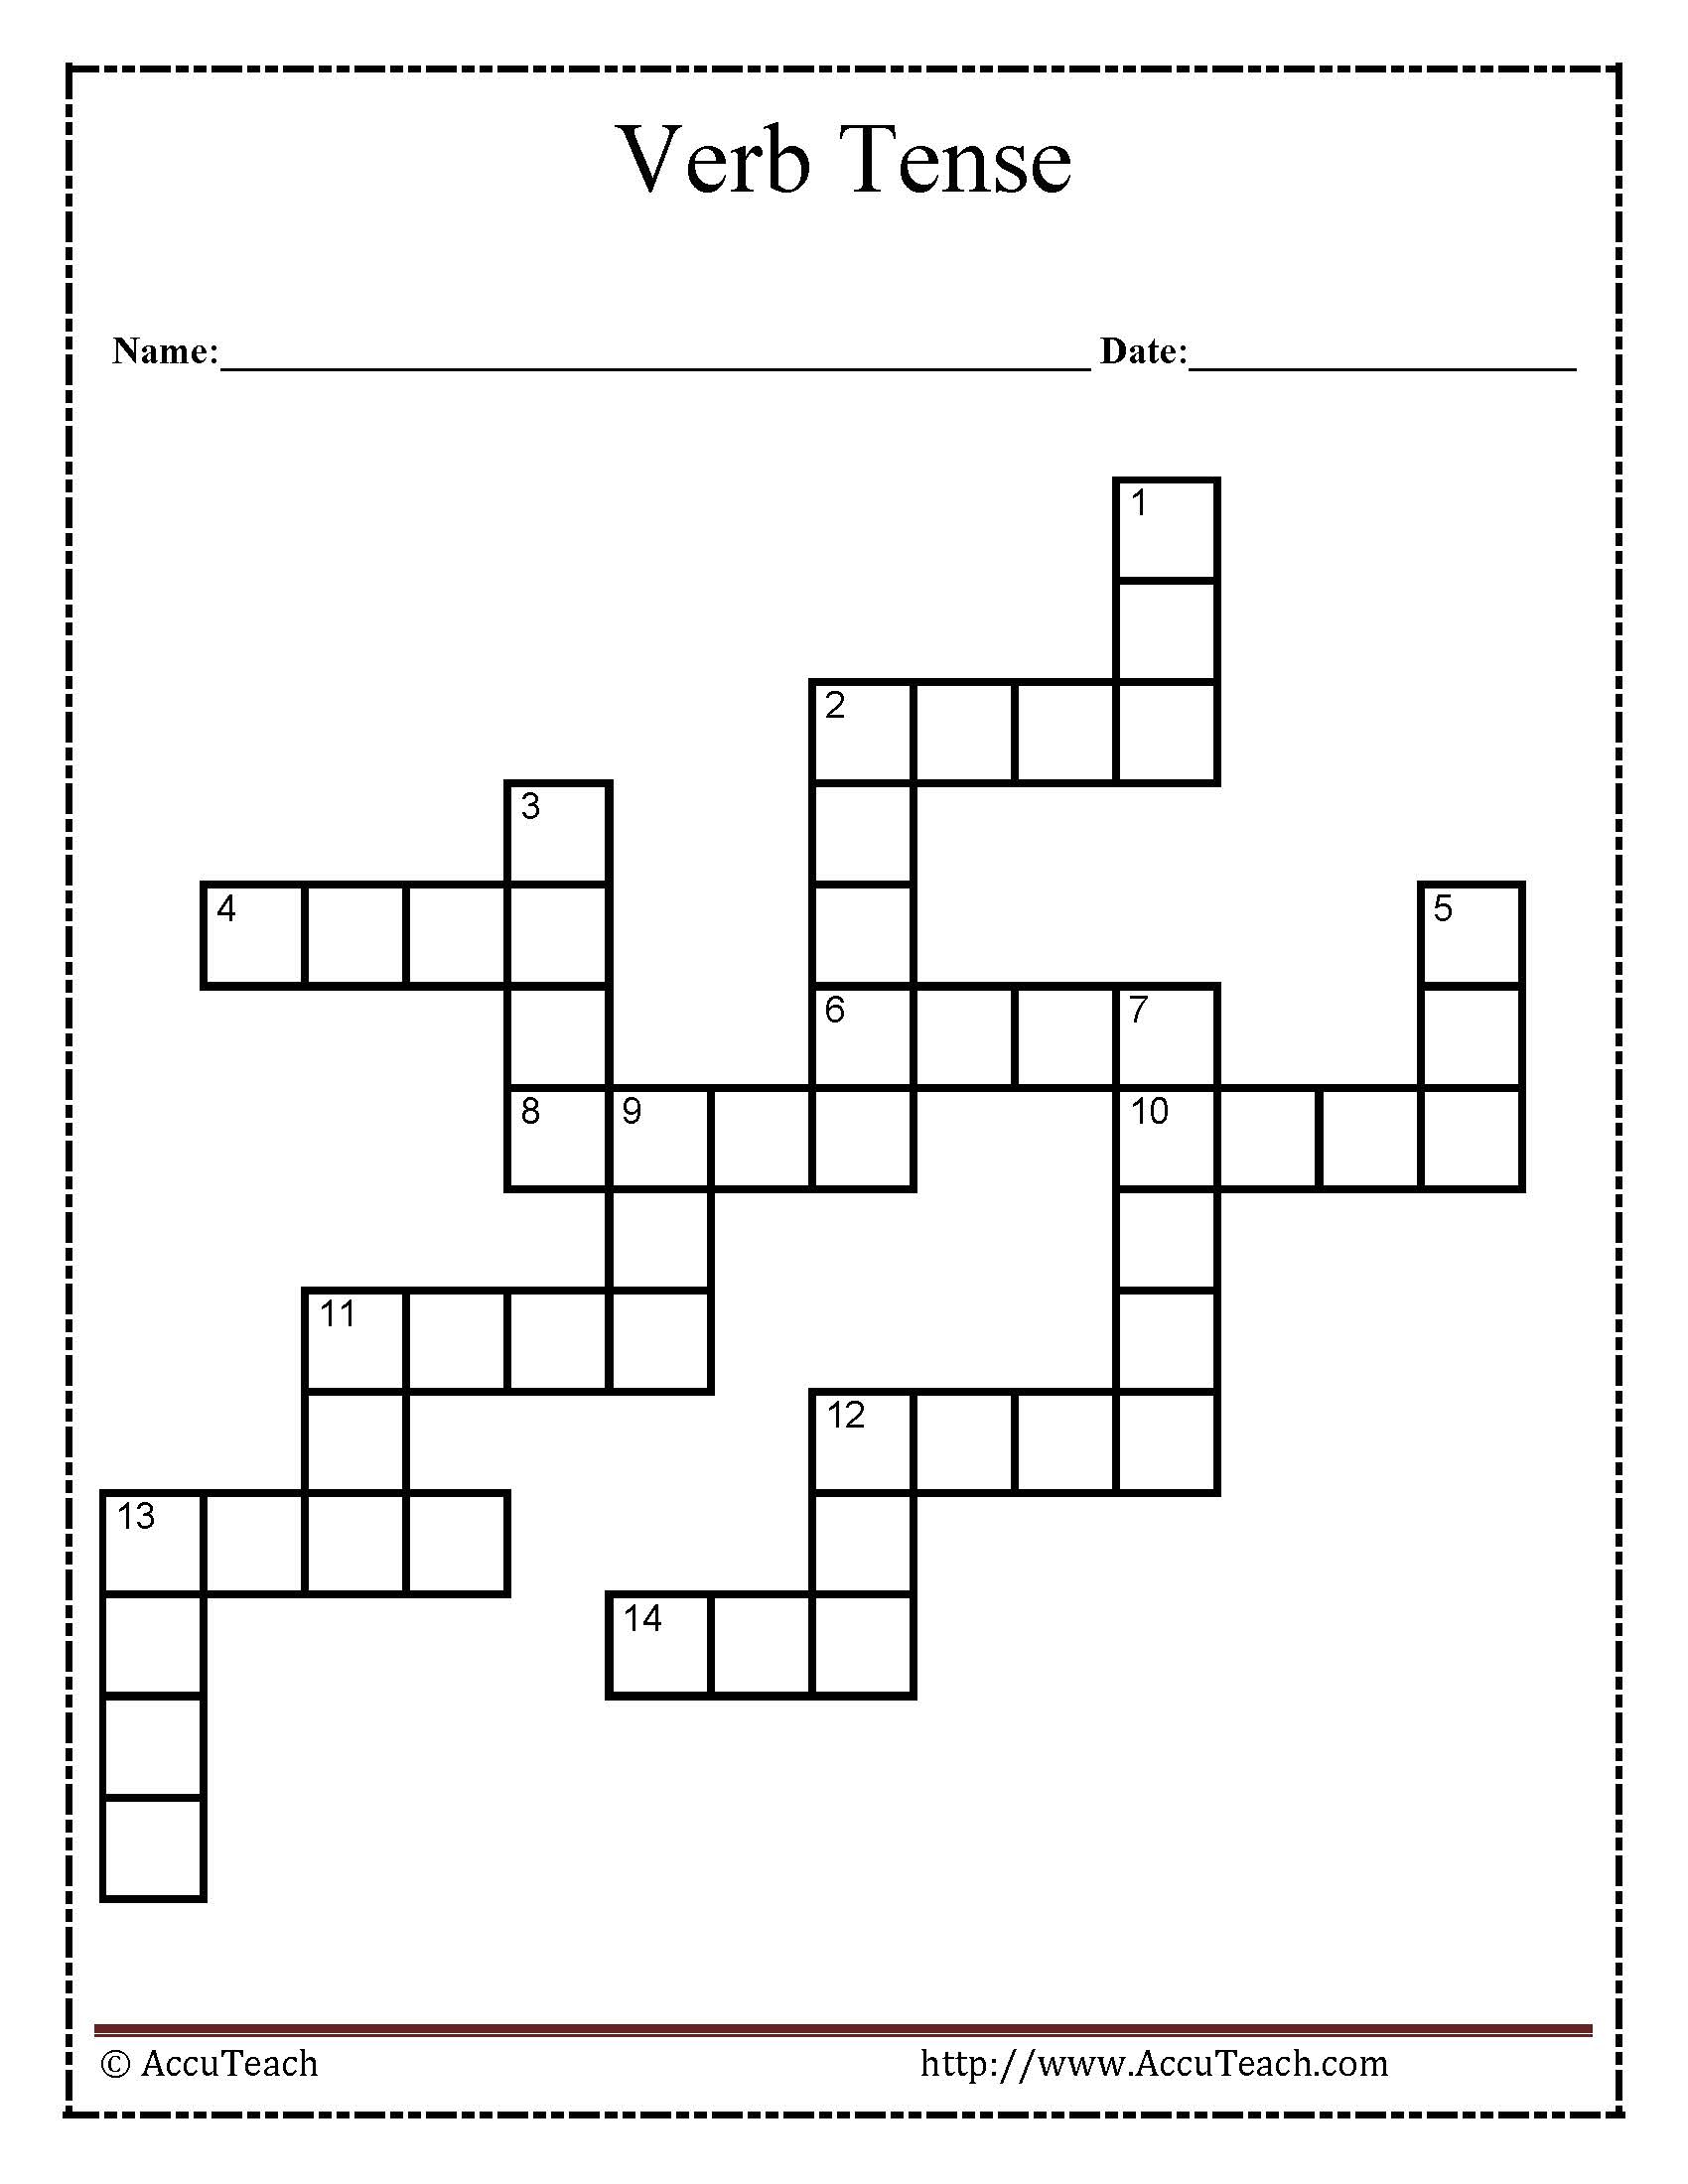 Verb Tense Crossword Puzzle Worksheet - Crossword Puzzles Printable On Tenses